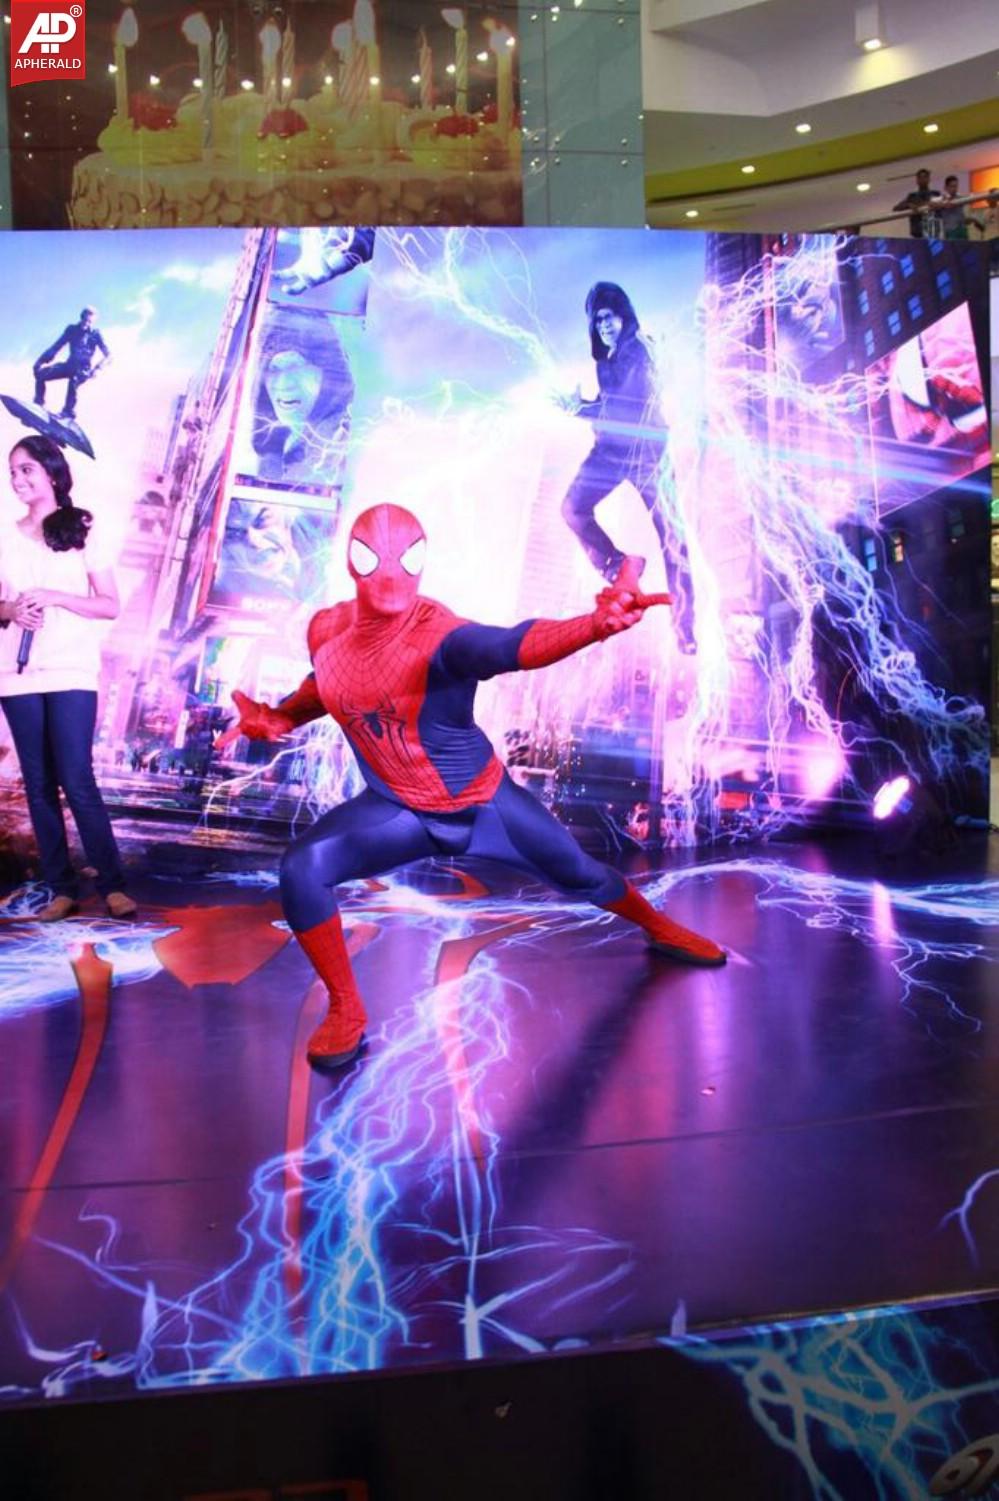 Jiiva Unveils Spiderman at Forum Mall